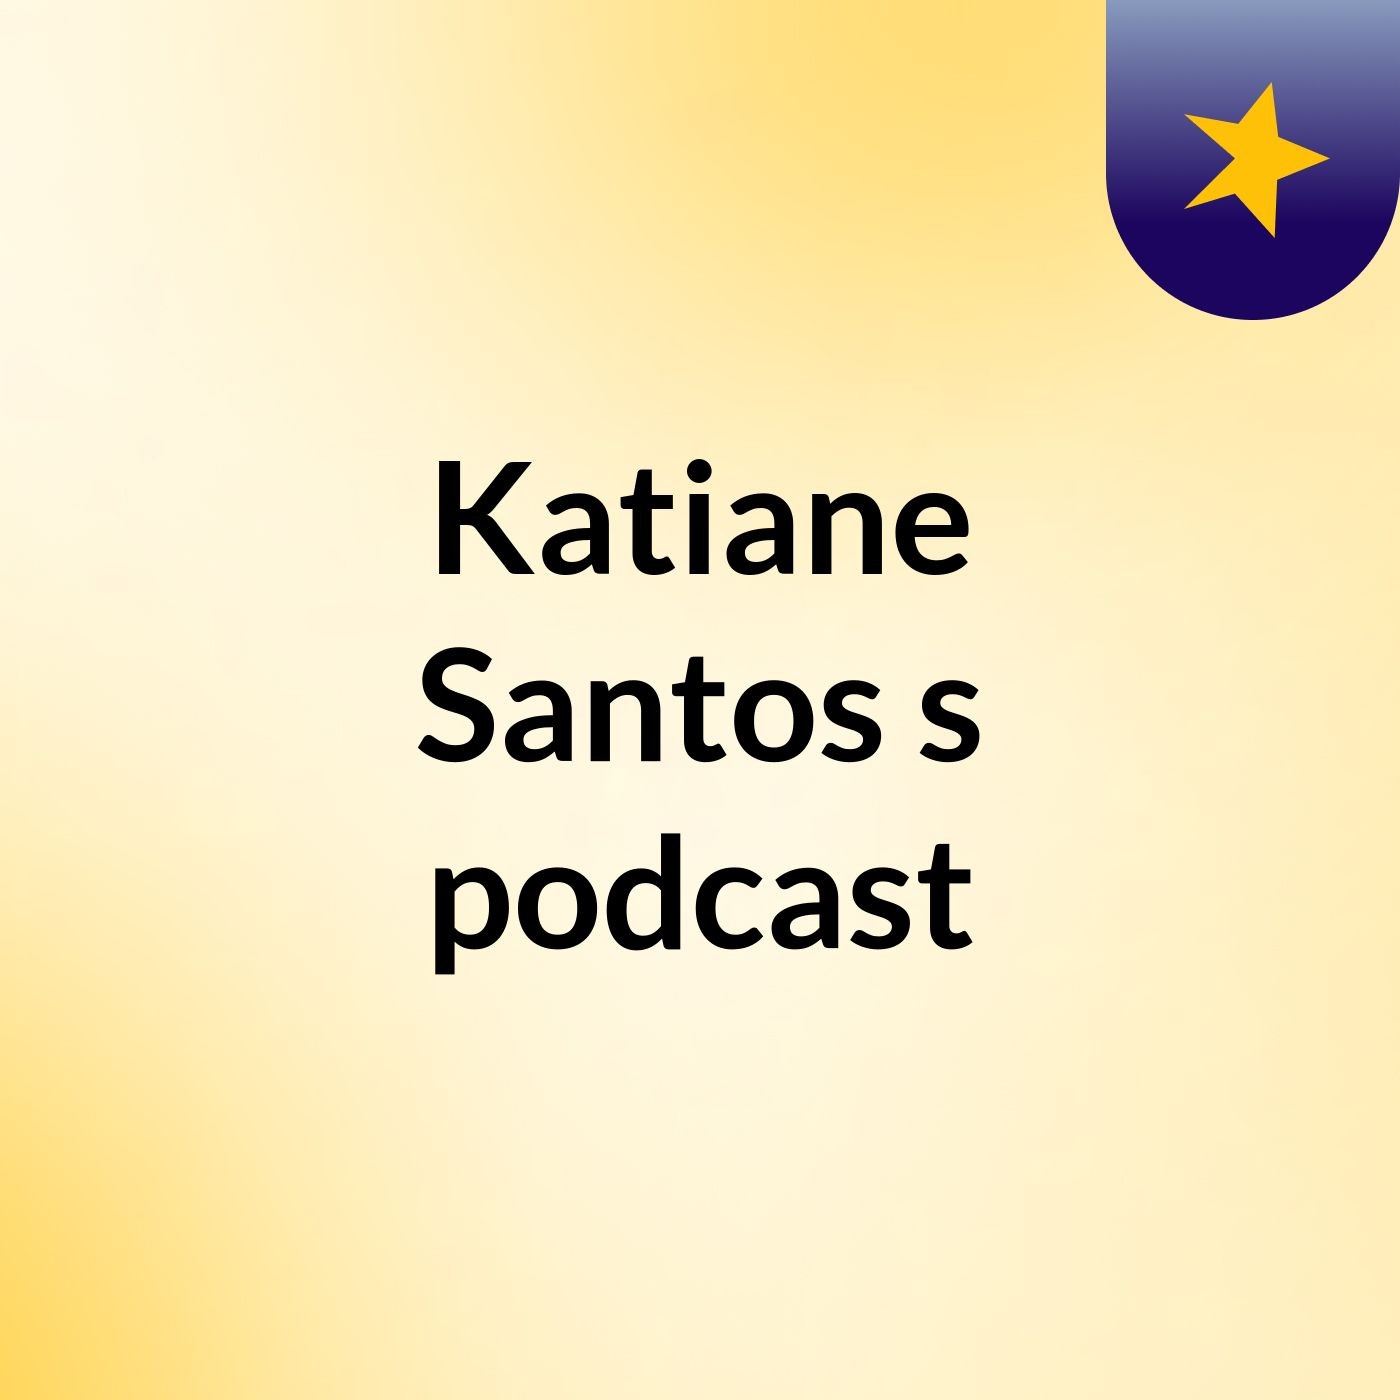 Katiane Santos's podcast